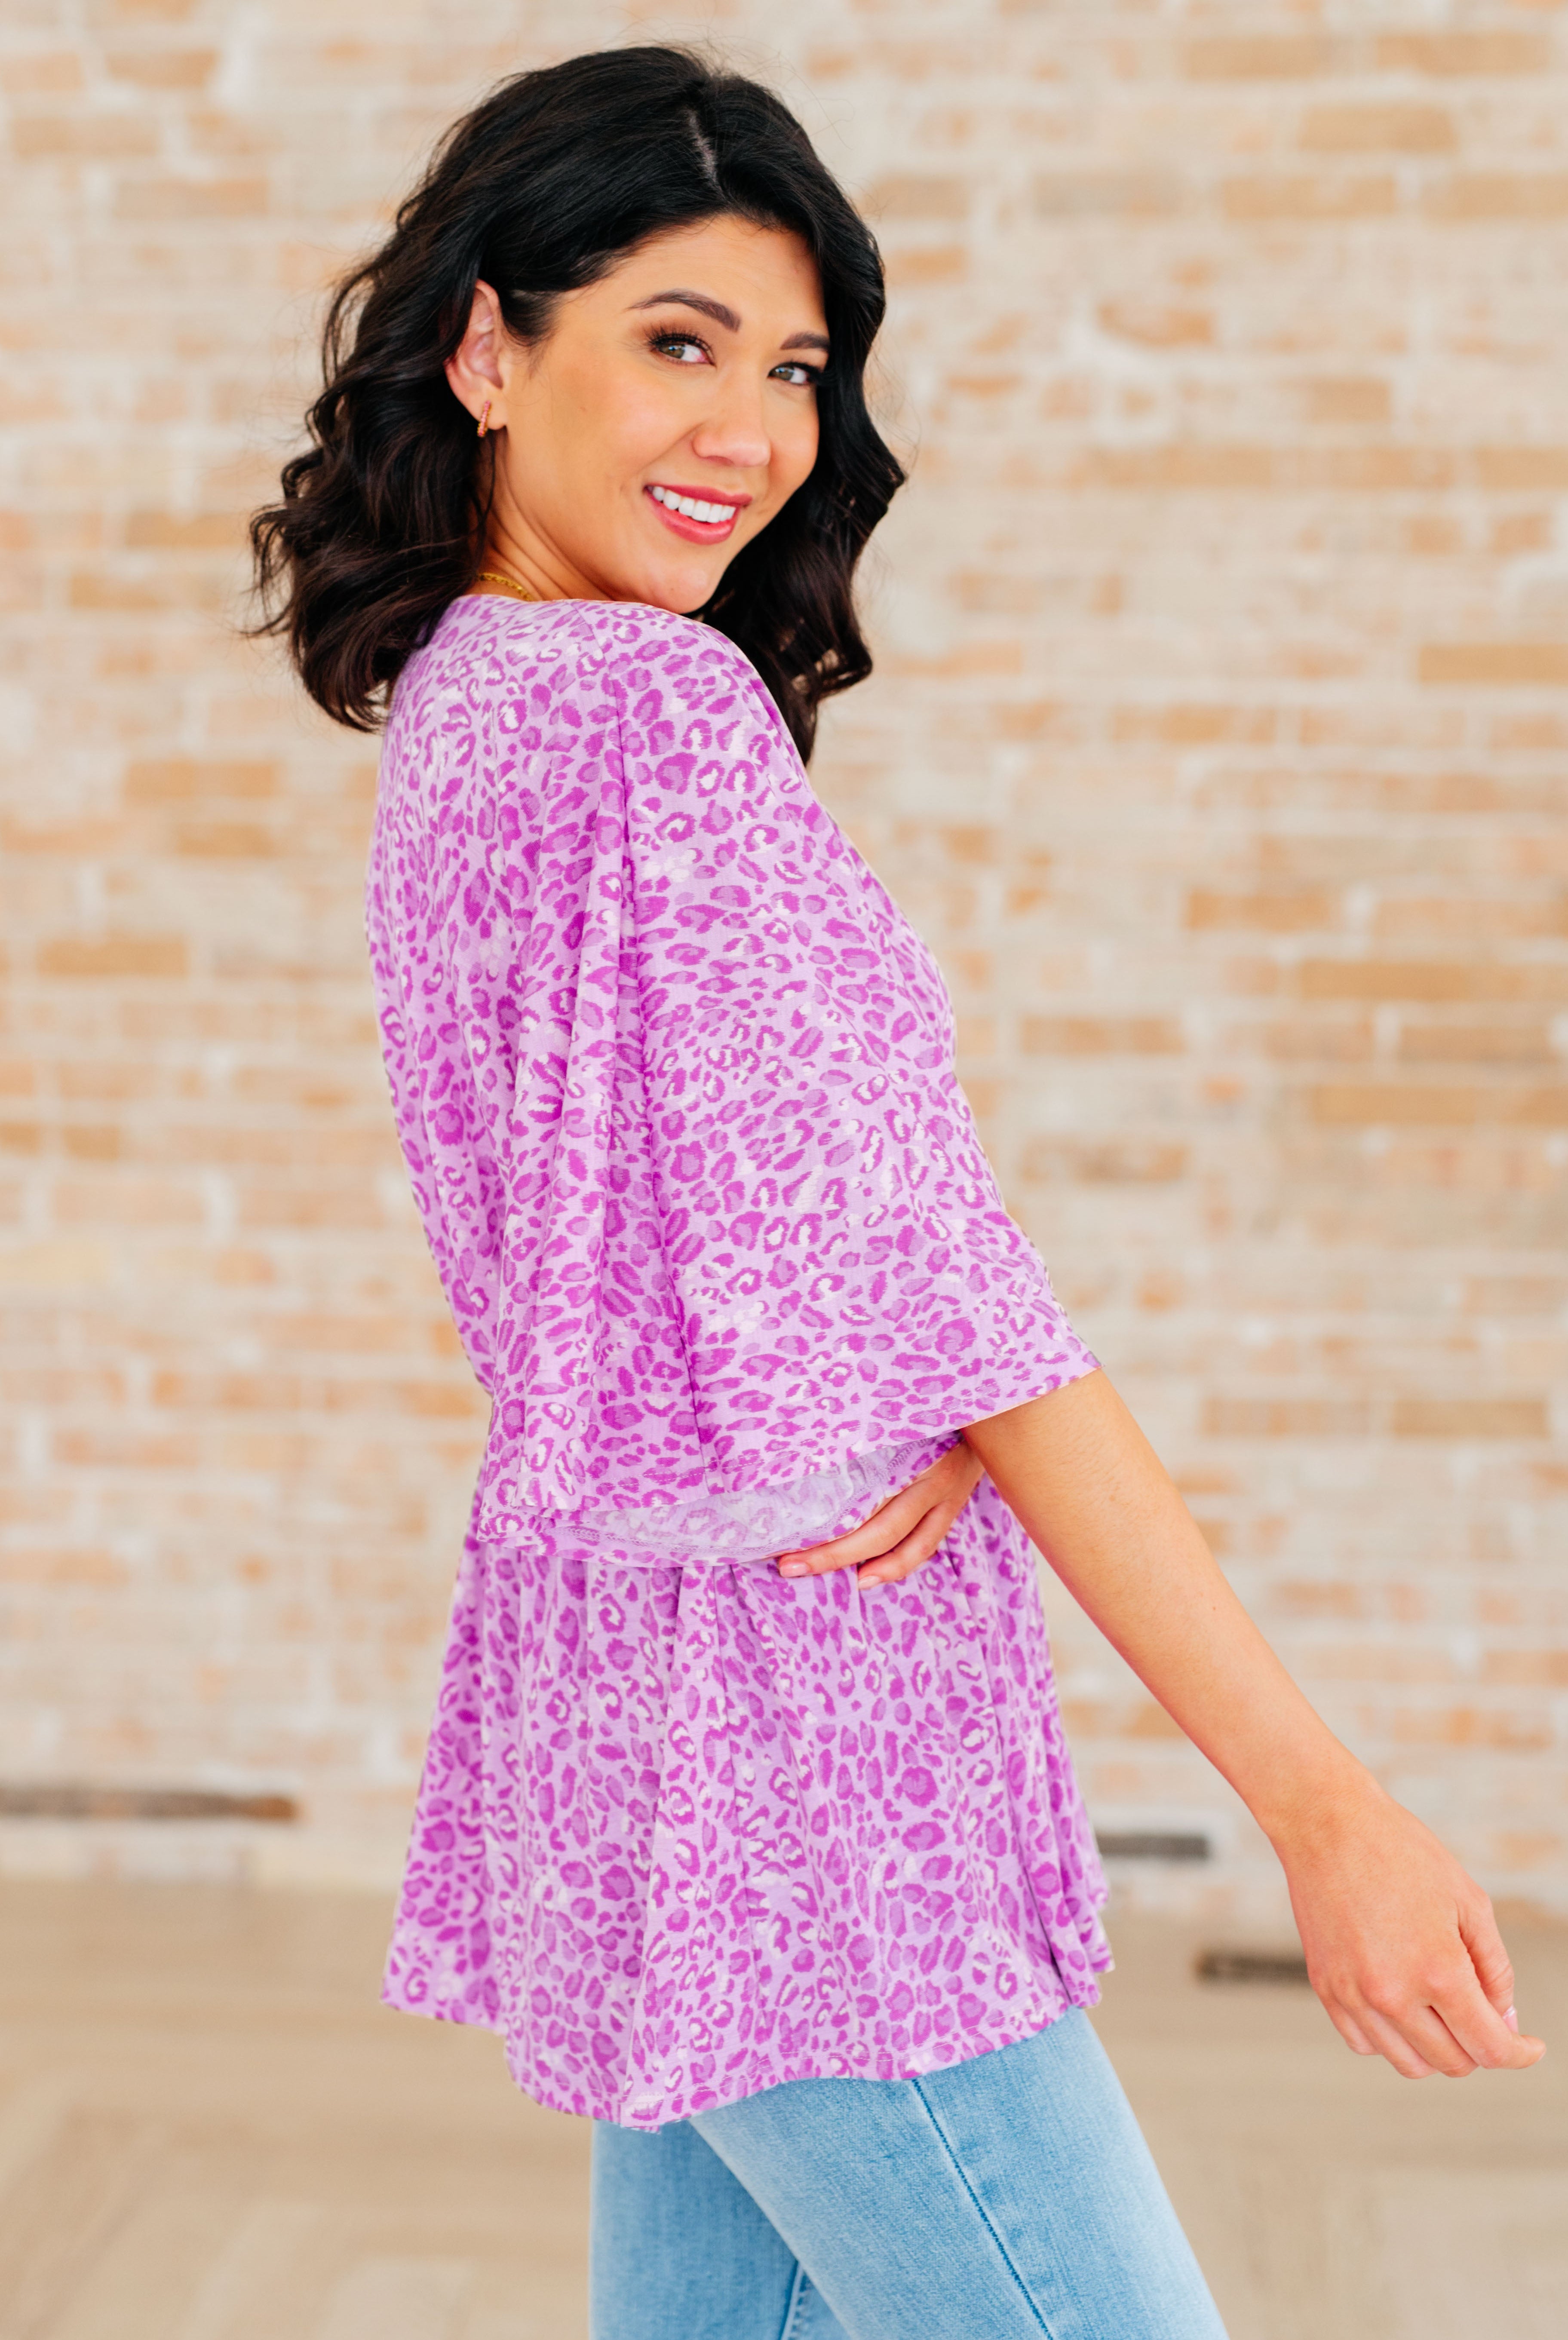 Dreamer Peplum Top in Lavender Leopard-Long Sleeve Tops-Krush Kandy, Women's Online Fashion Boutique Located in Phoenix, Arizona (Scottsdale Area)